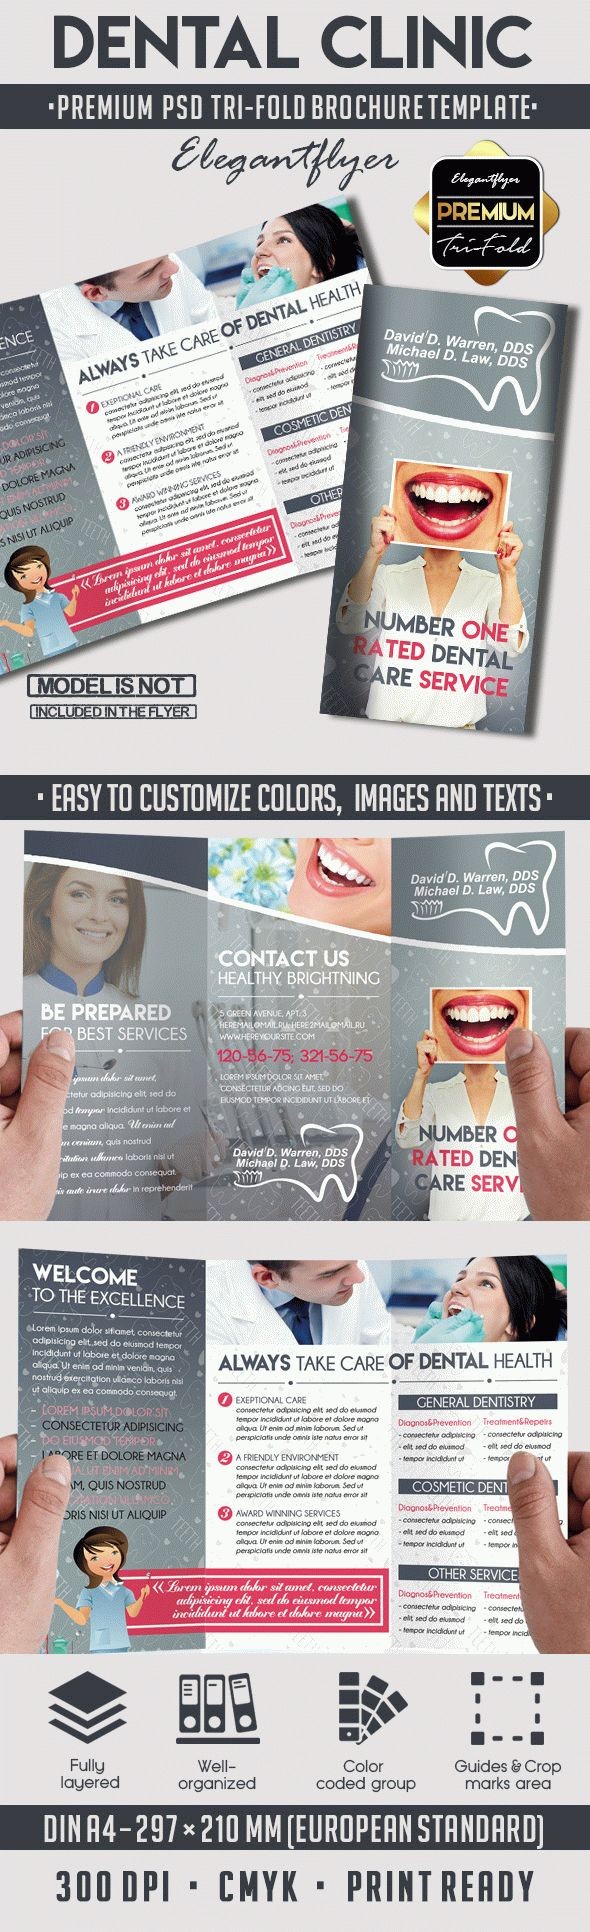 Tri-Fold Brochure for Dental Clinic - 10018012